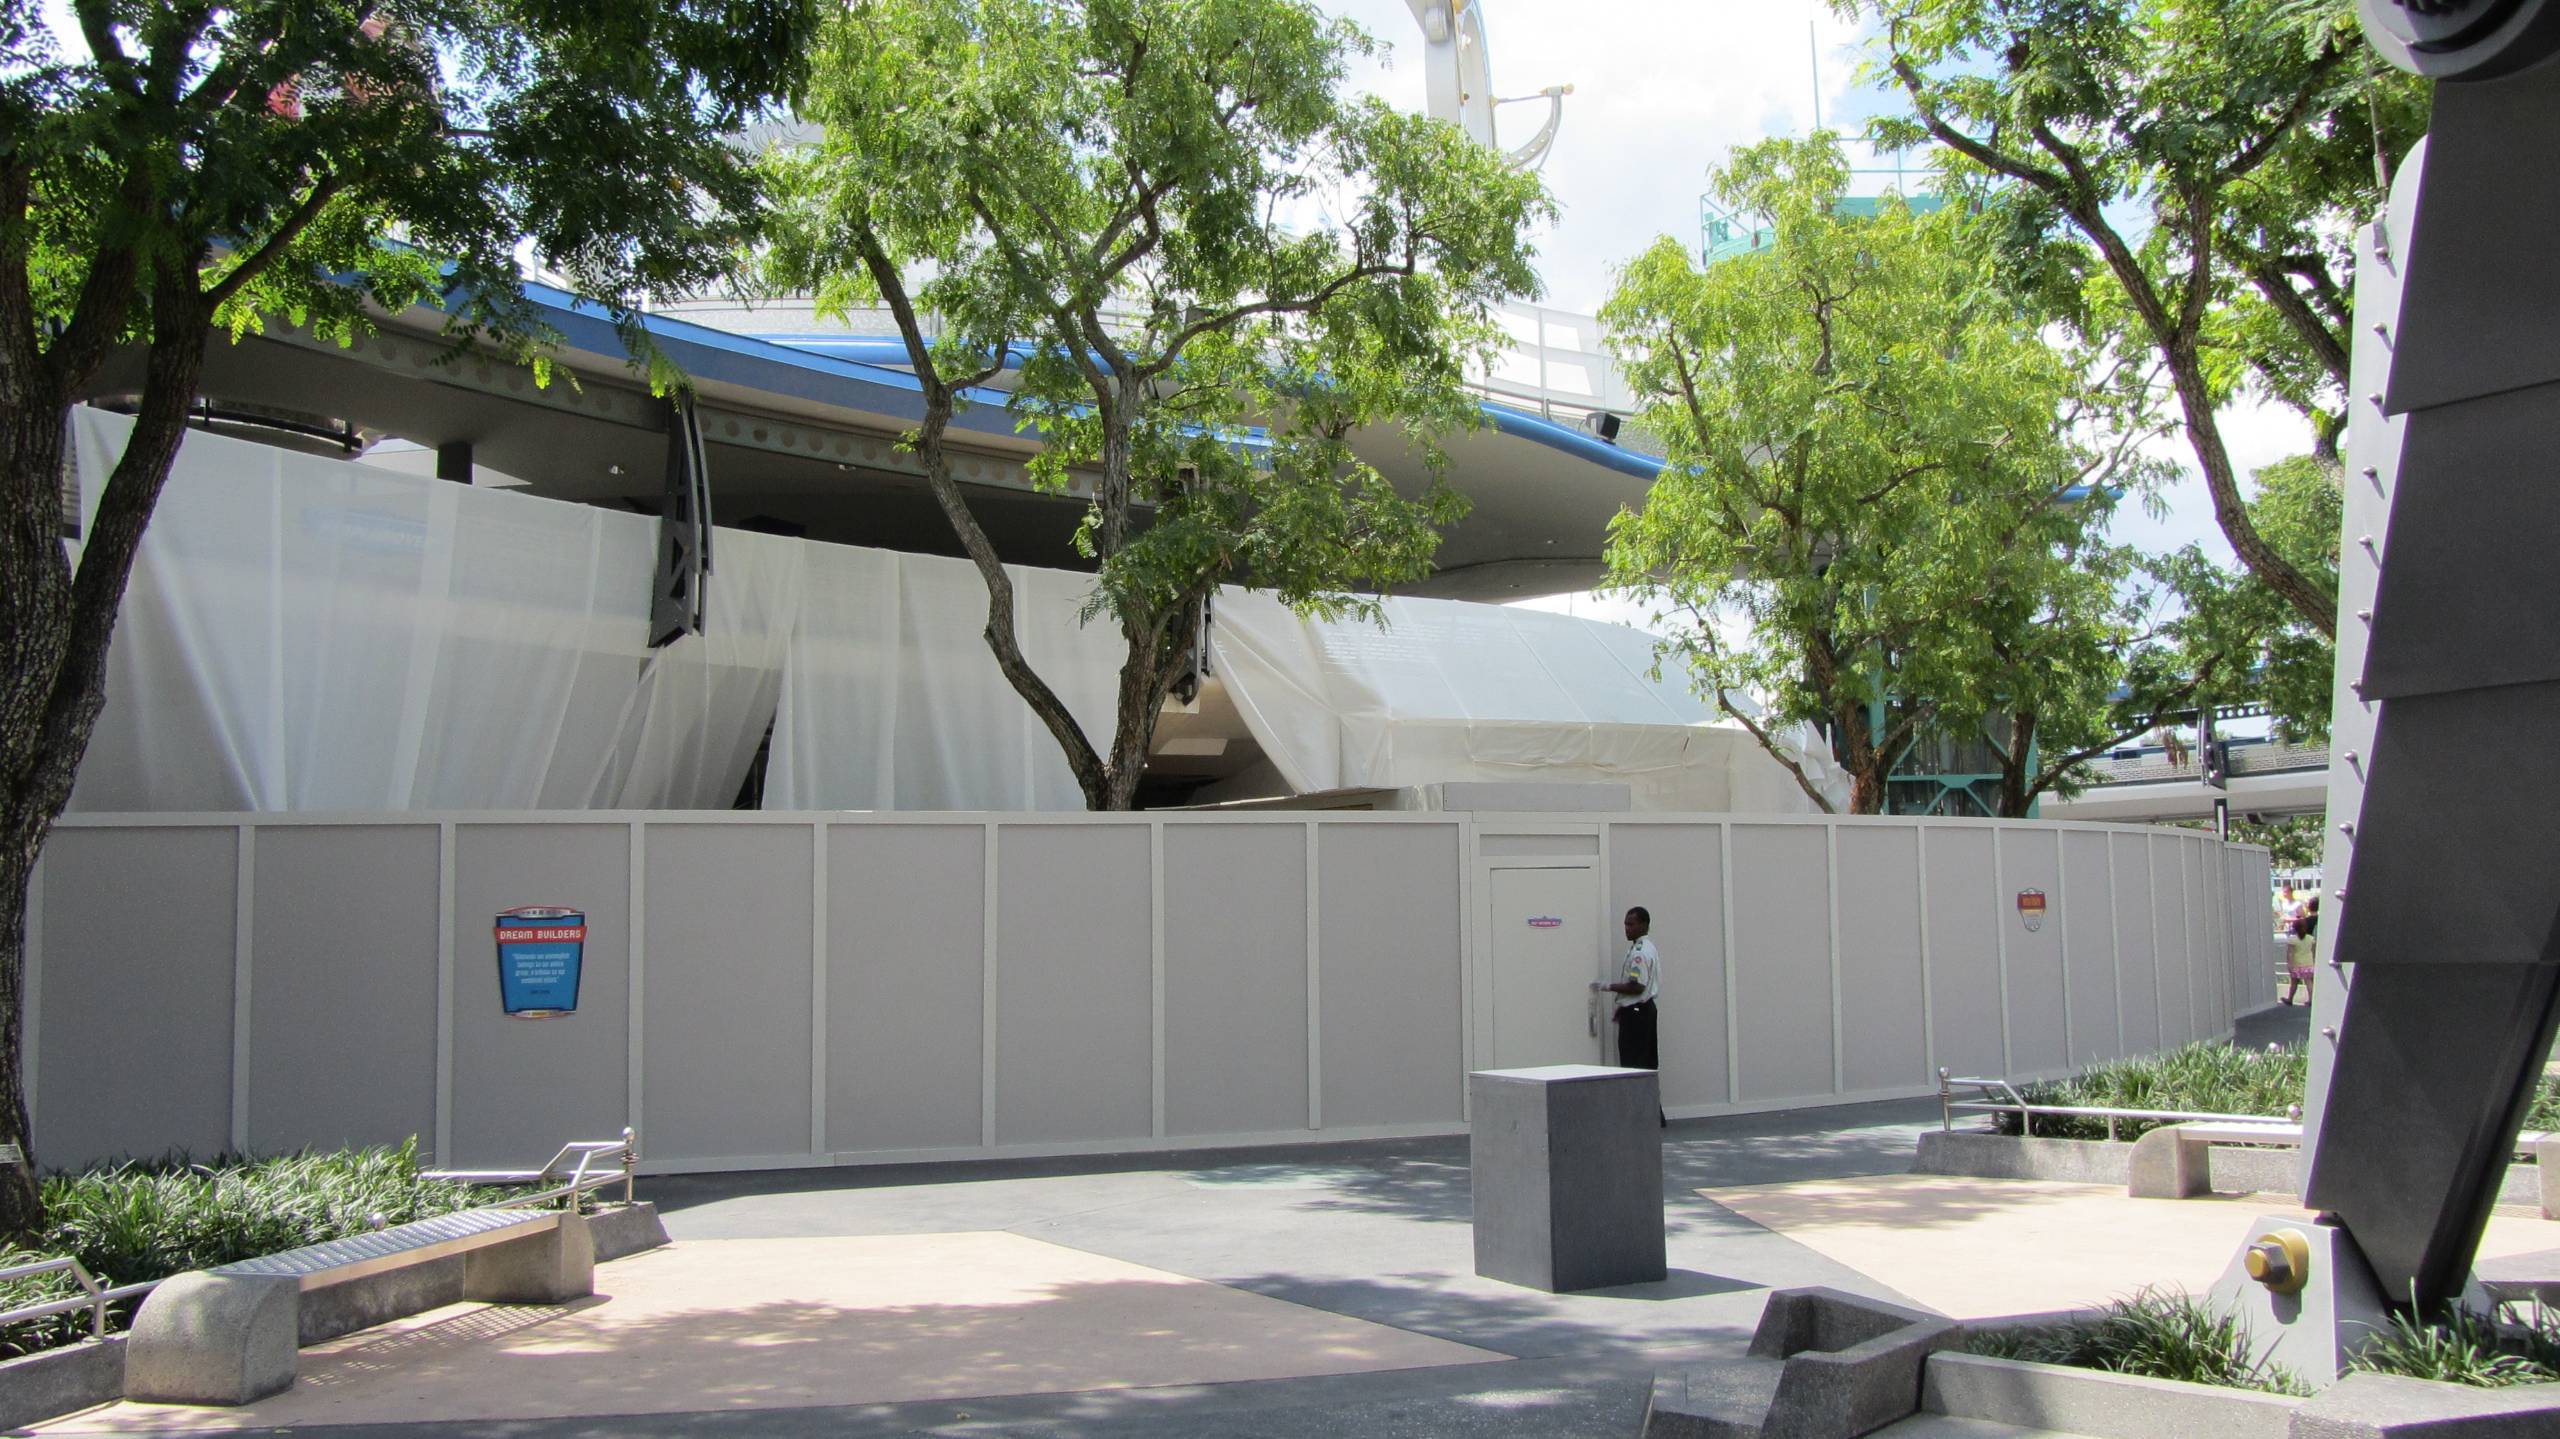 Tomorrowland Transit Authority and Astro Orbiter refurbishment